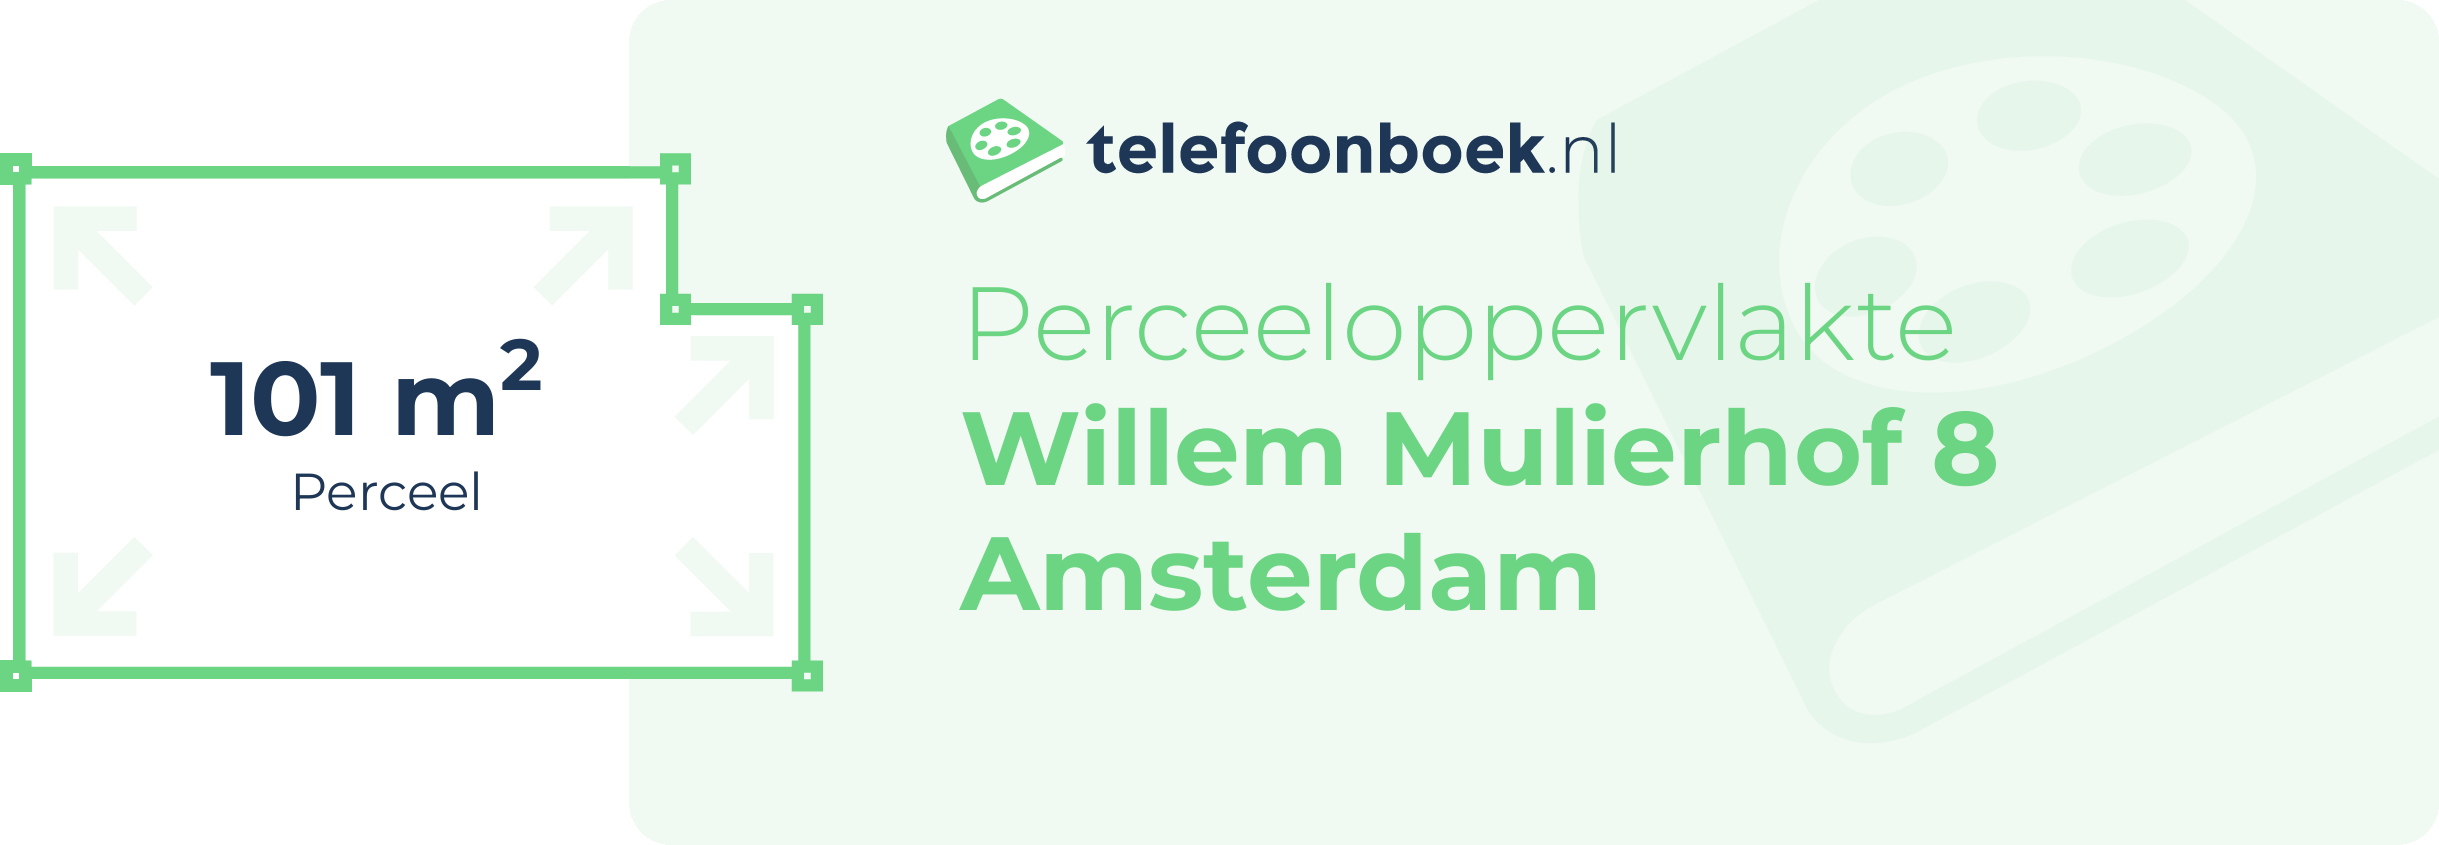 Perceeloppervlakte Willem Mulierhof 8 Amsterdam